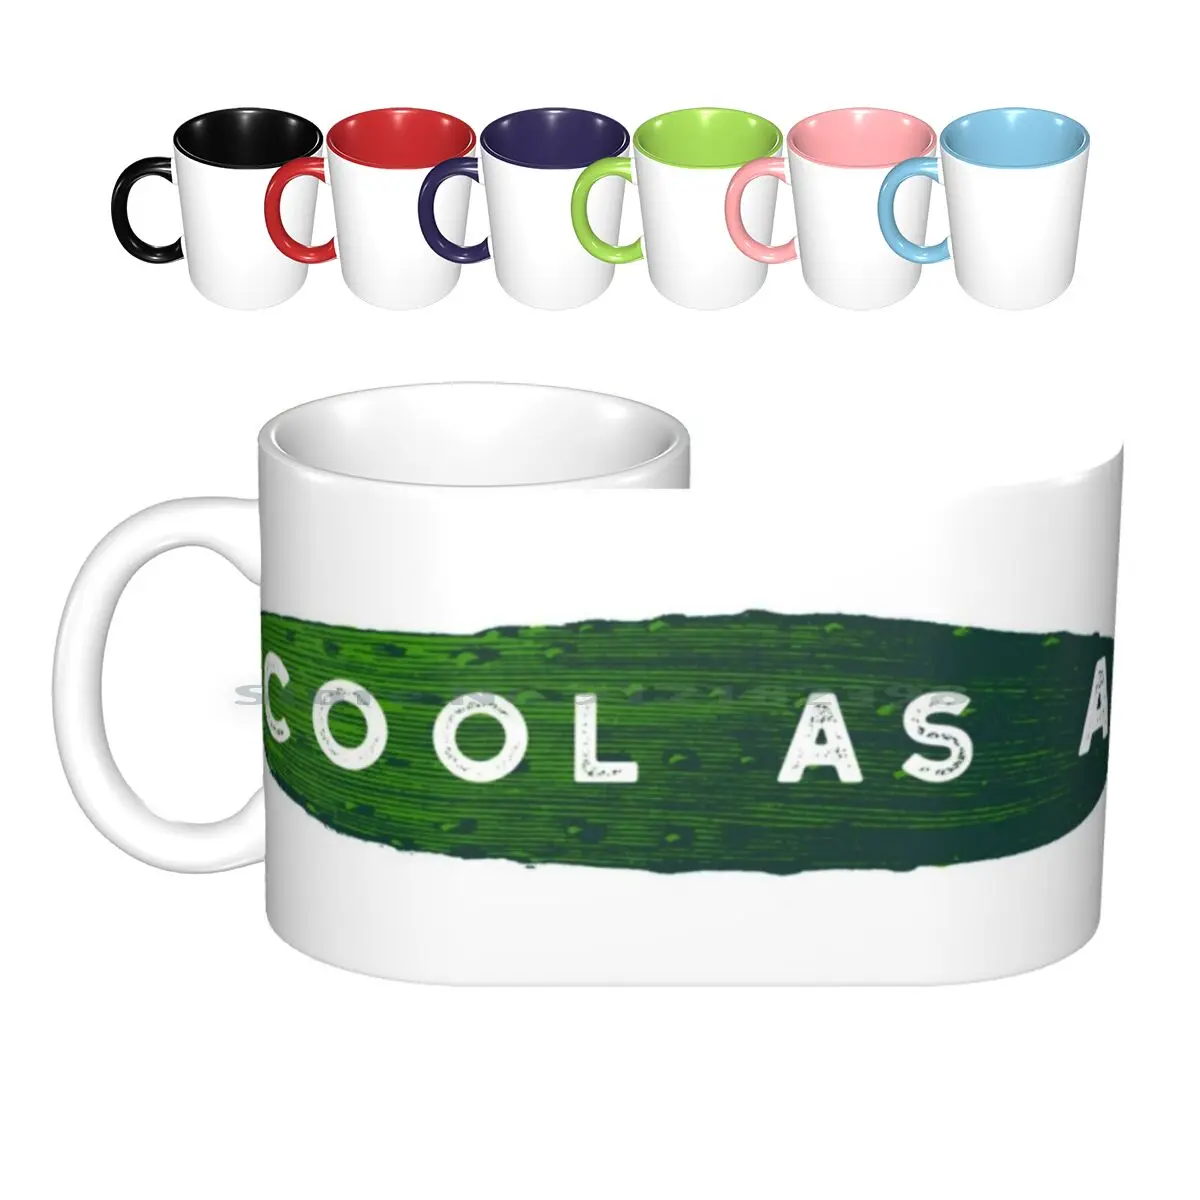 

Cool As A Cucumber Ceramic Mugs Coffee Cups Milk Tea Mug Cool As A Cucumber Realistic Style Green And White Veggies Cucumbers